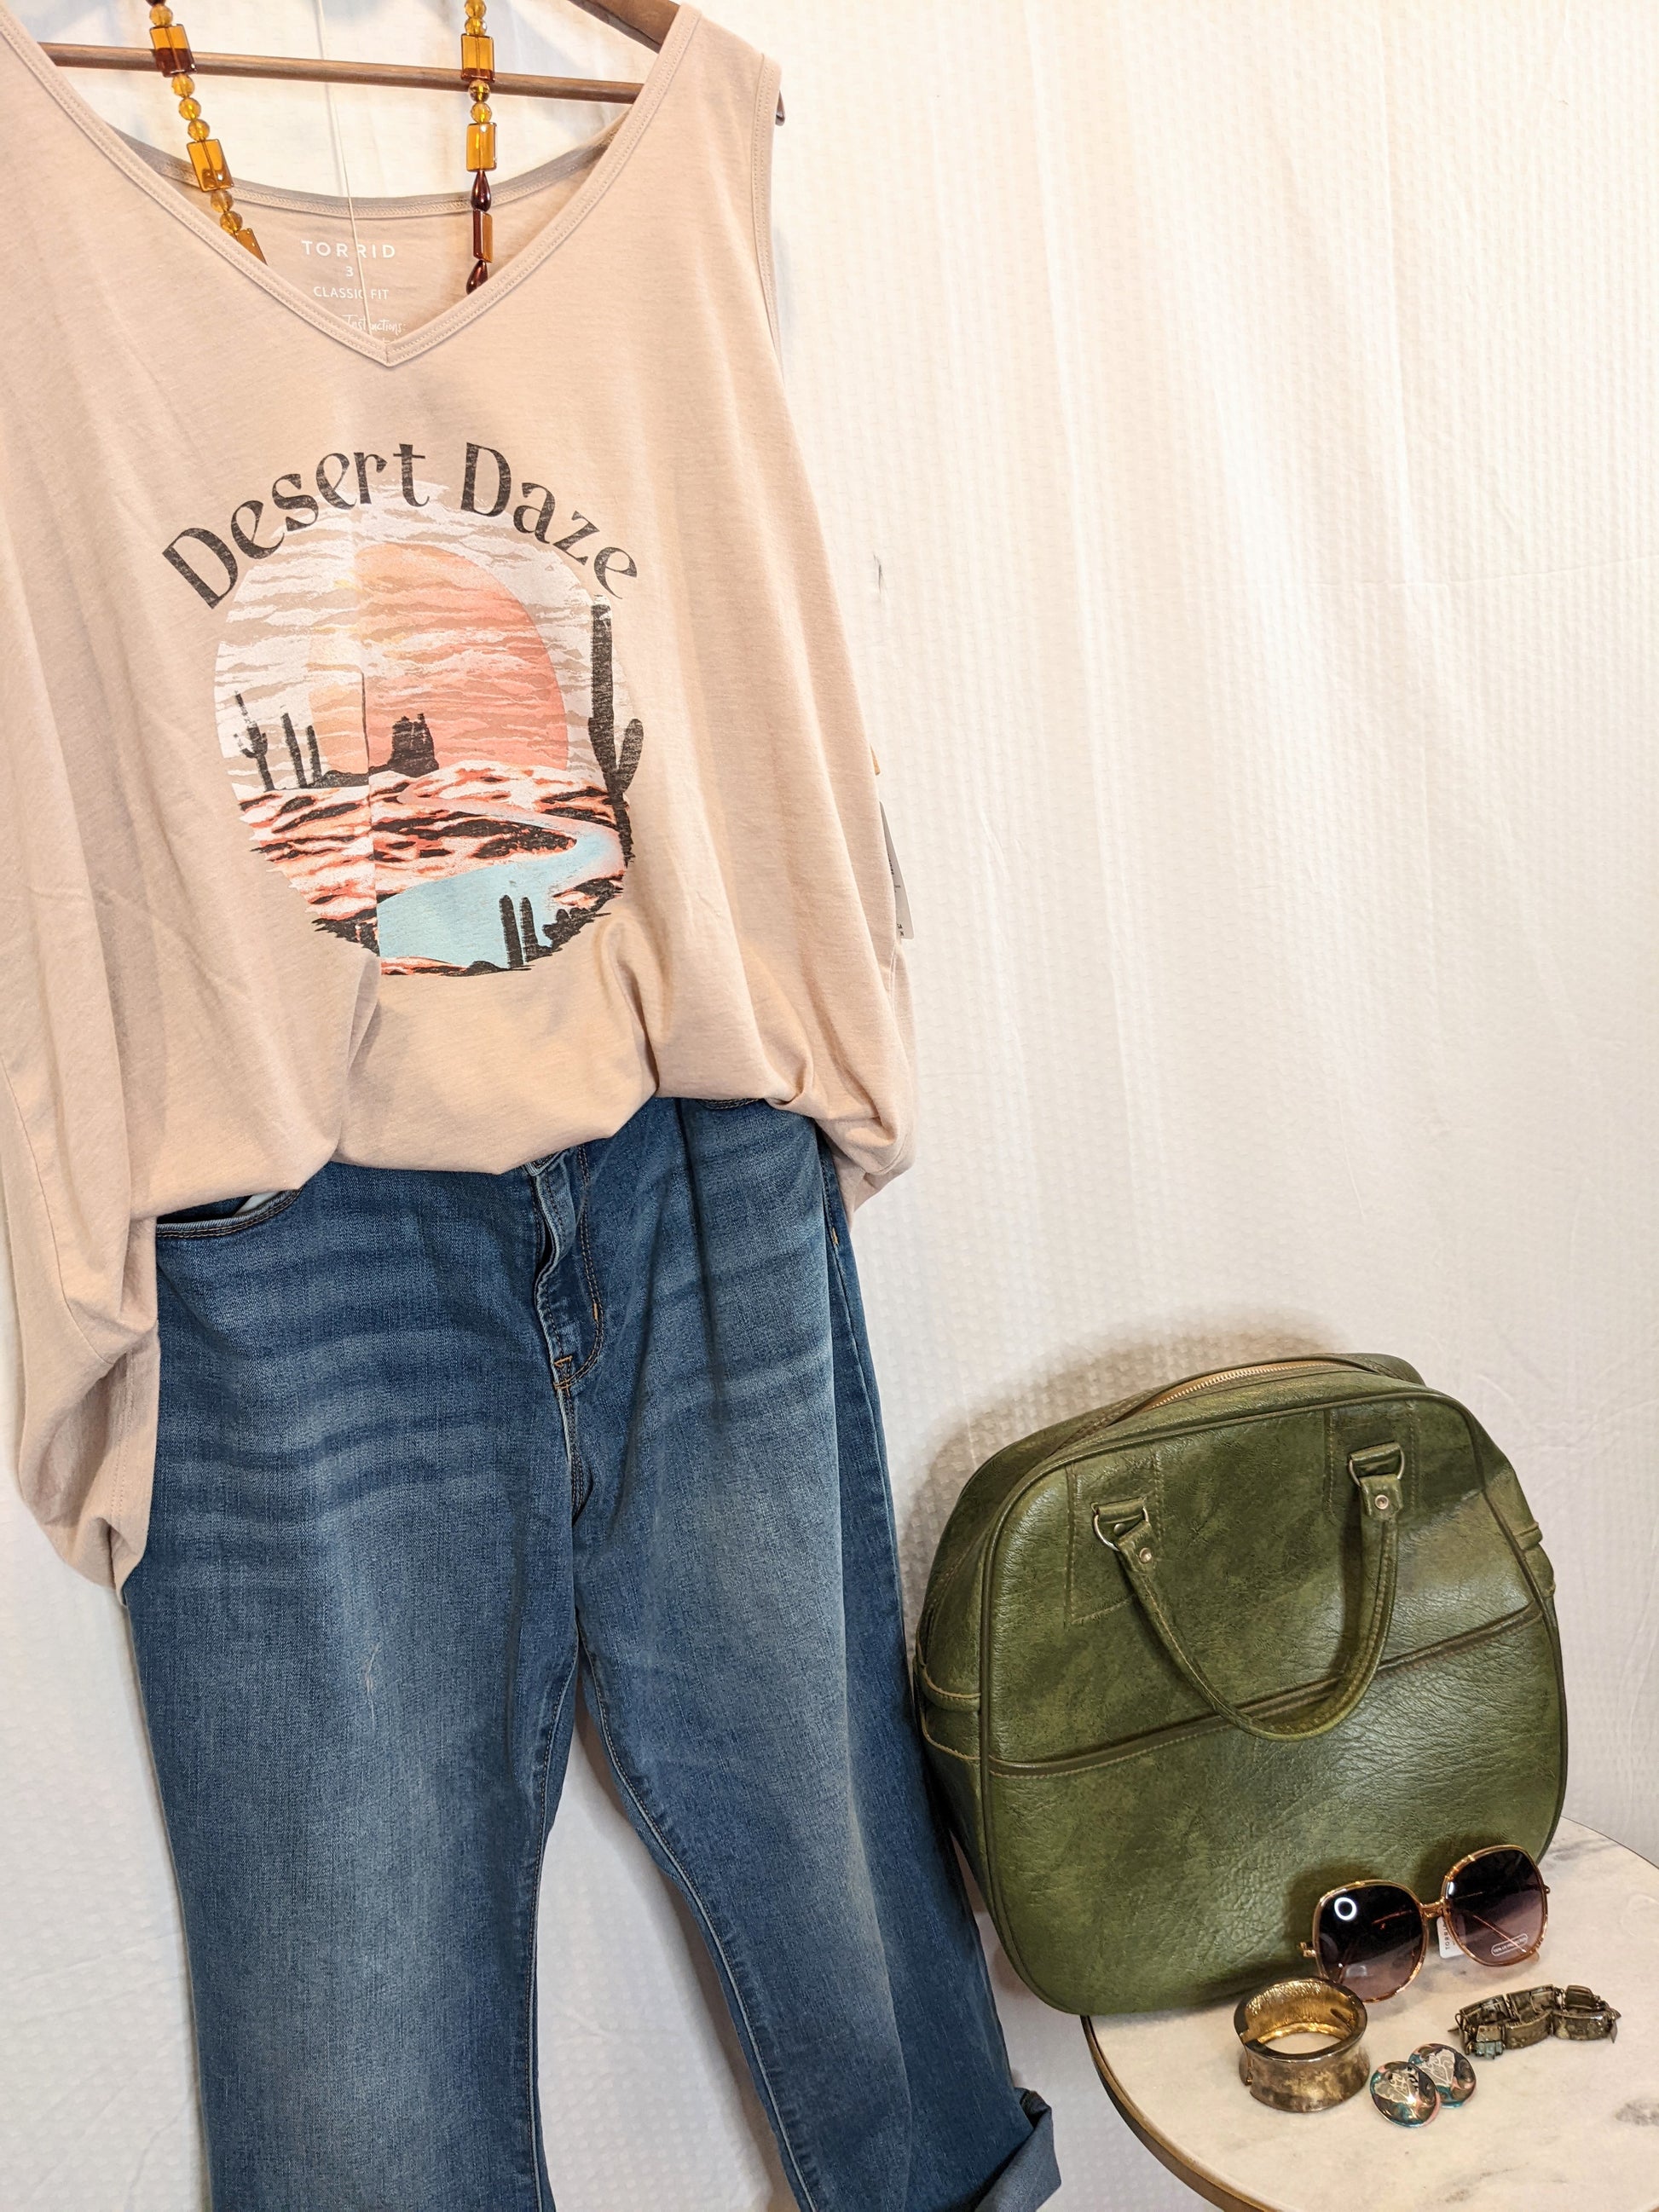 Daize - Daize Top on Designer Wardrobe